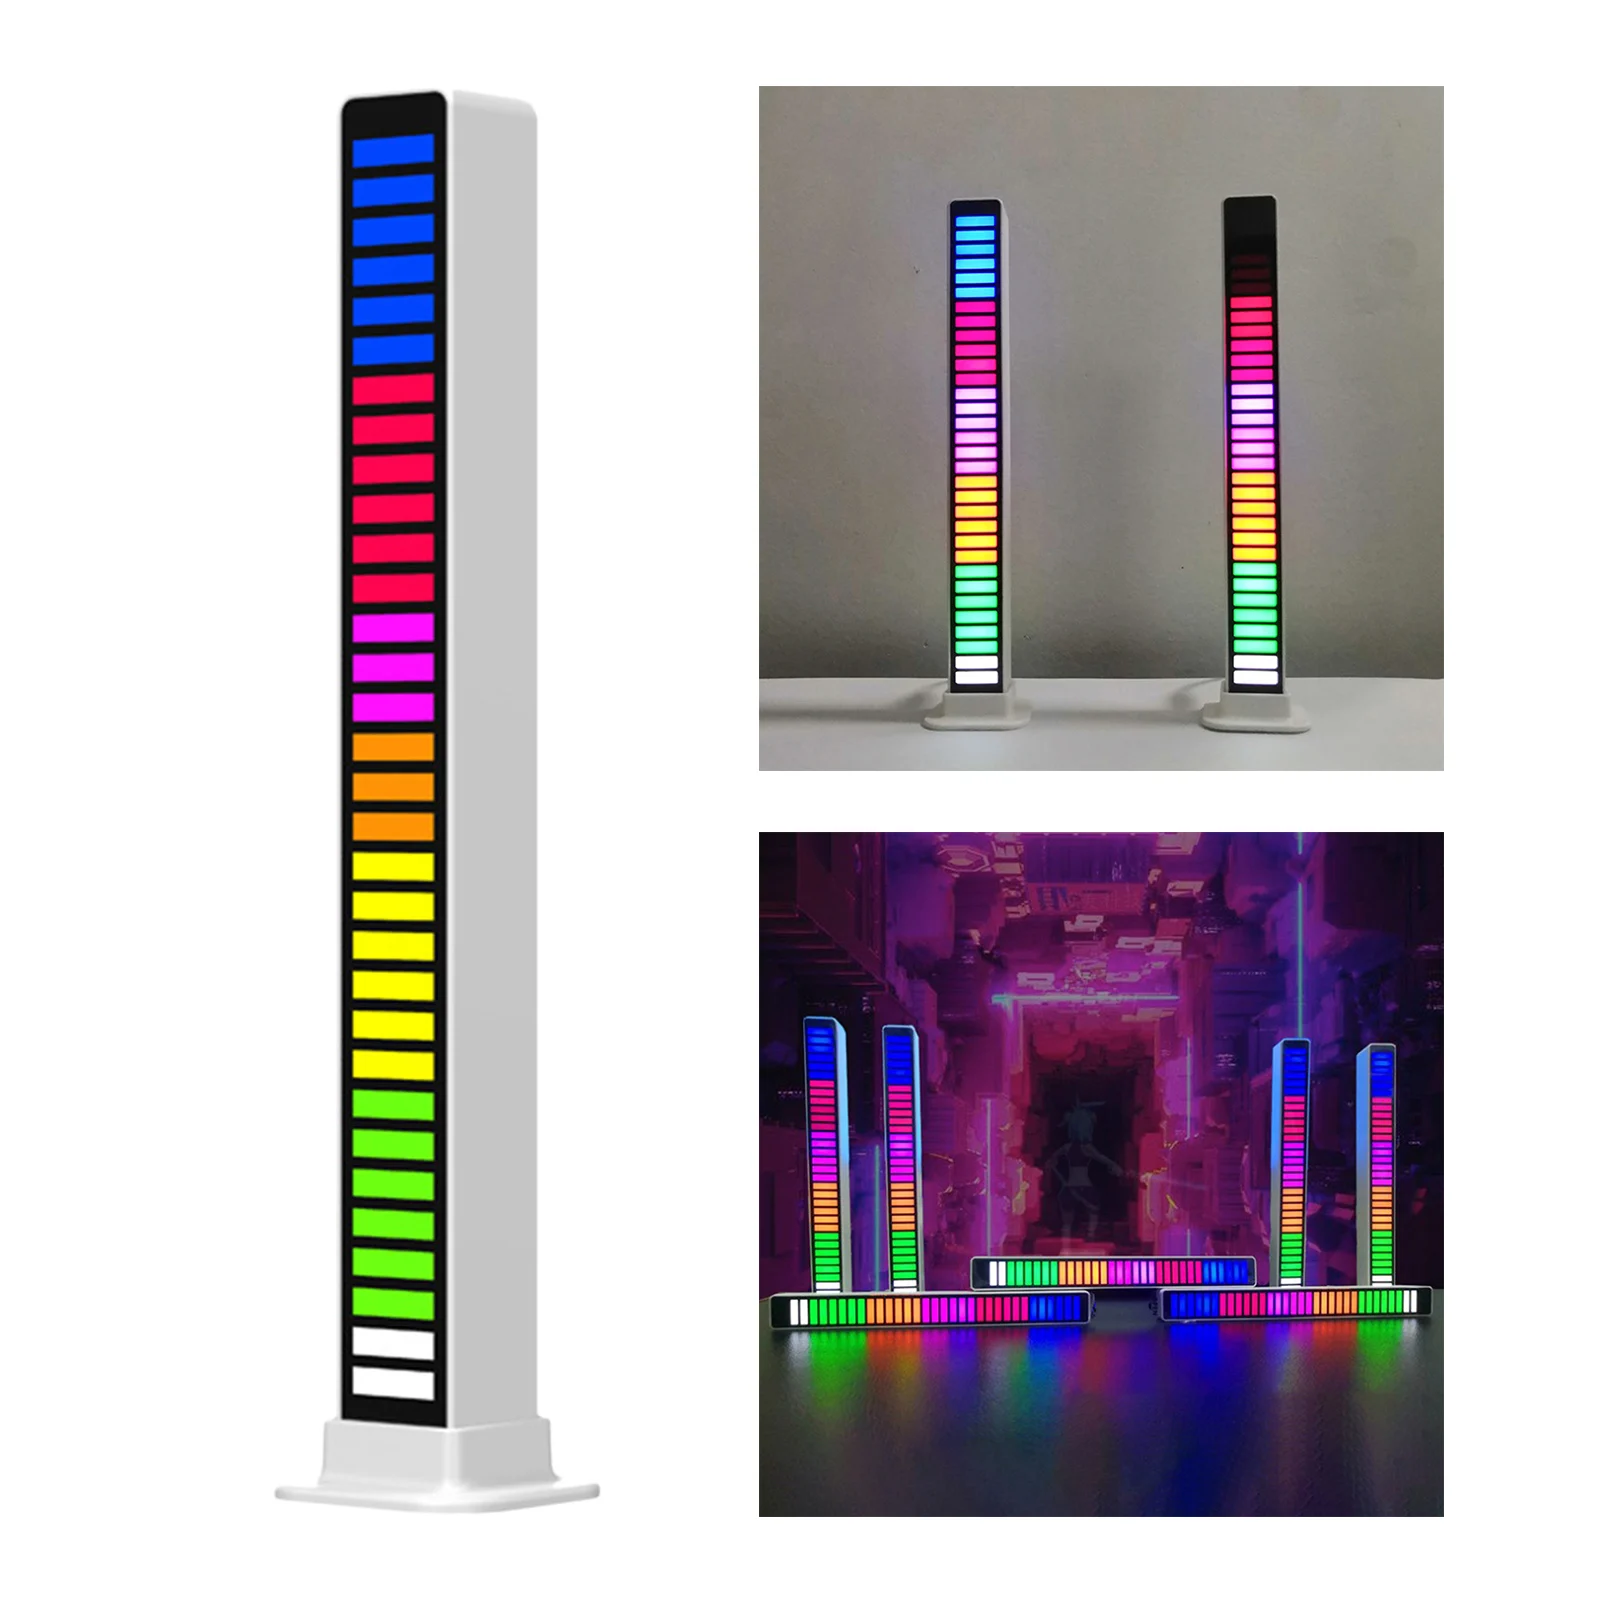 Creative RGB Music Sound Control LED Level Light Bar Novelty Rhythm Lamp Desktop Setup Backlight Car Vehicle Atmosphere Light